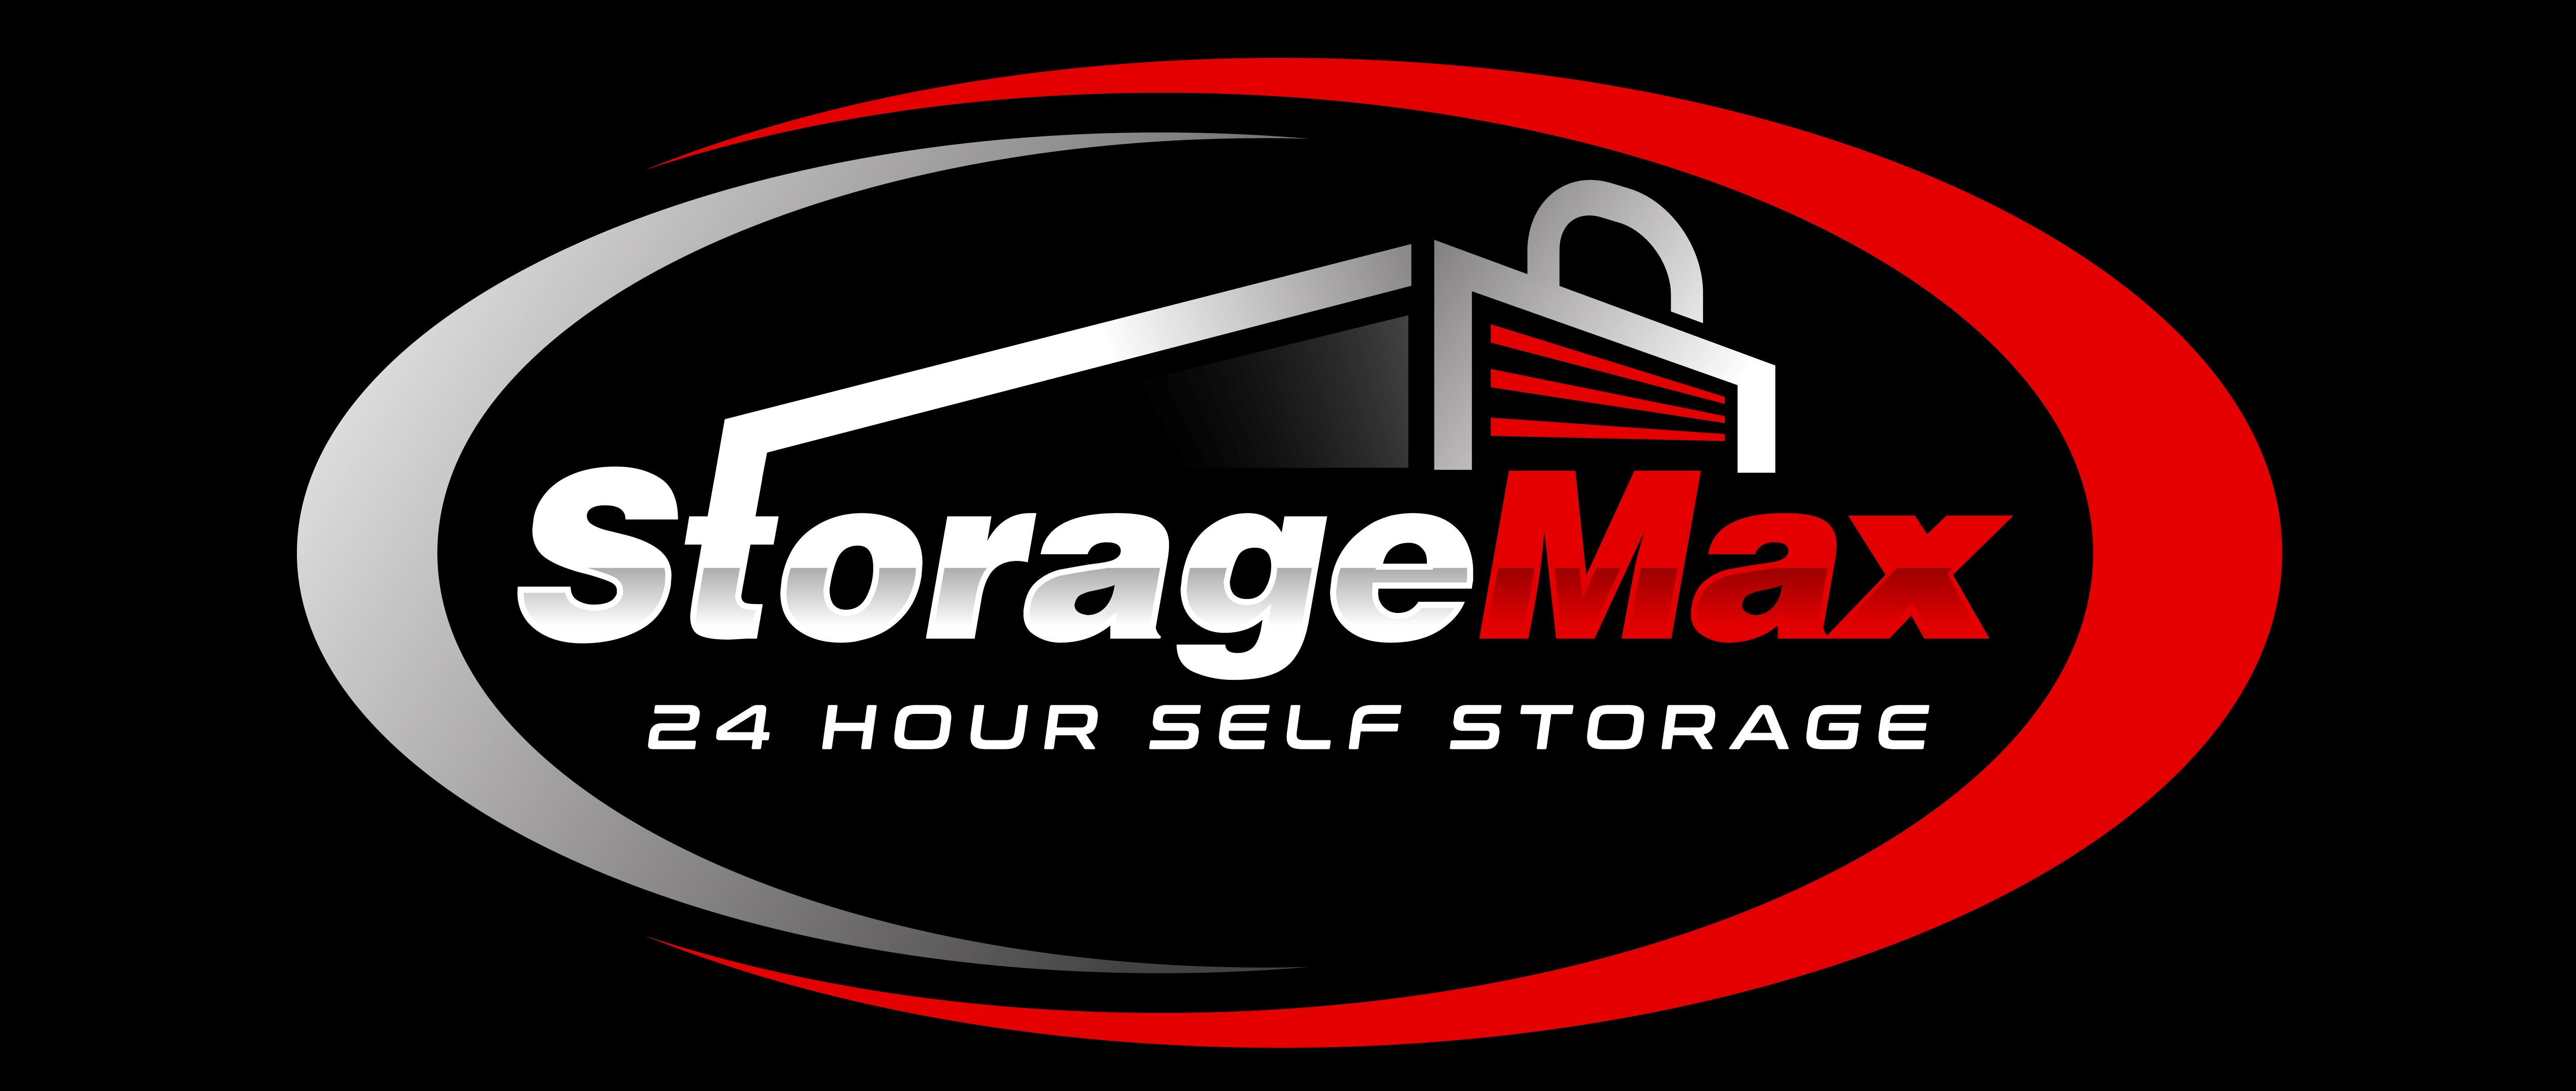 Storage Max in Dublin, GA